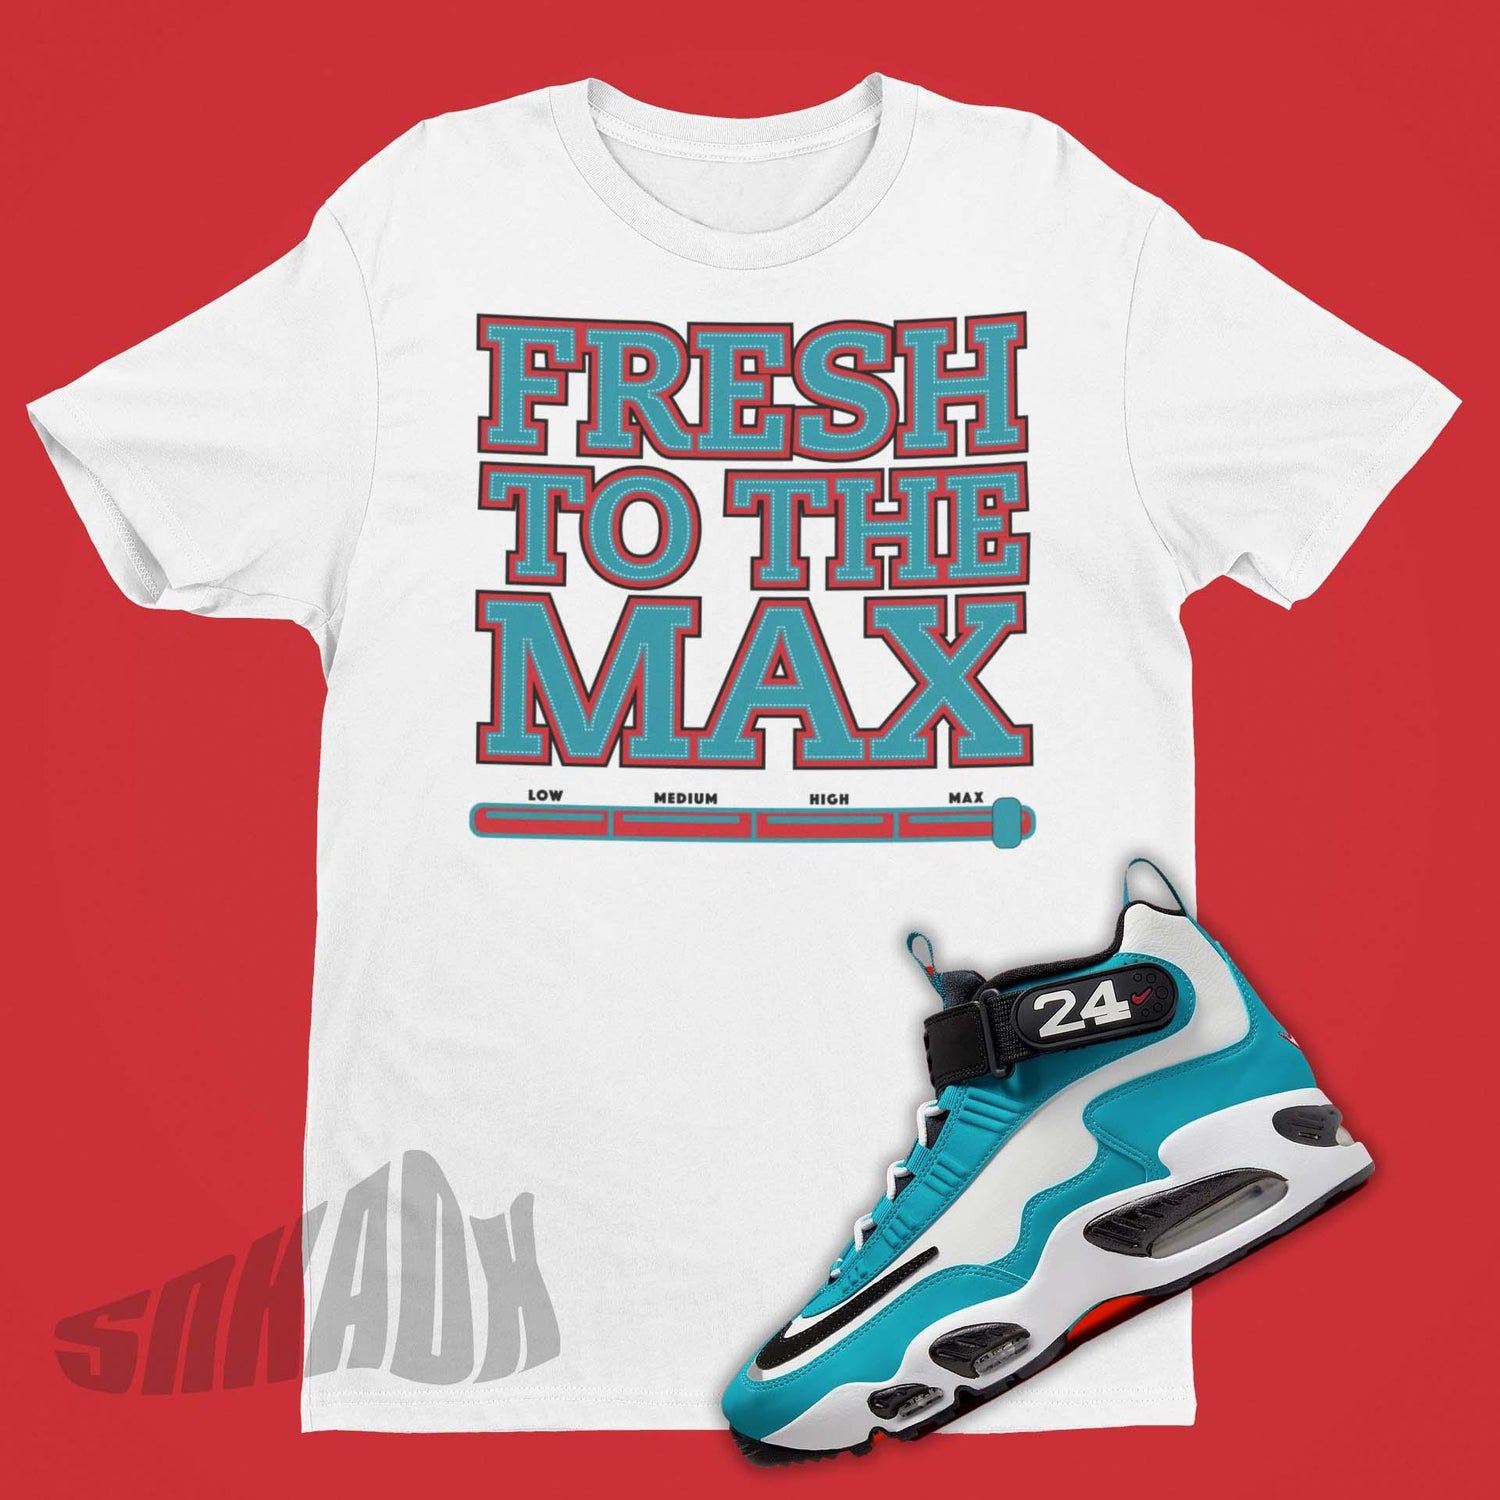 Shirt To Match Nike Air Griffey Max 1 Alternate